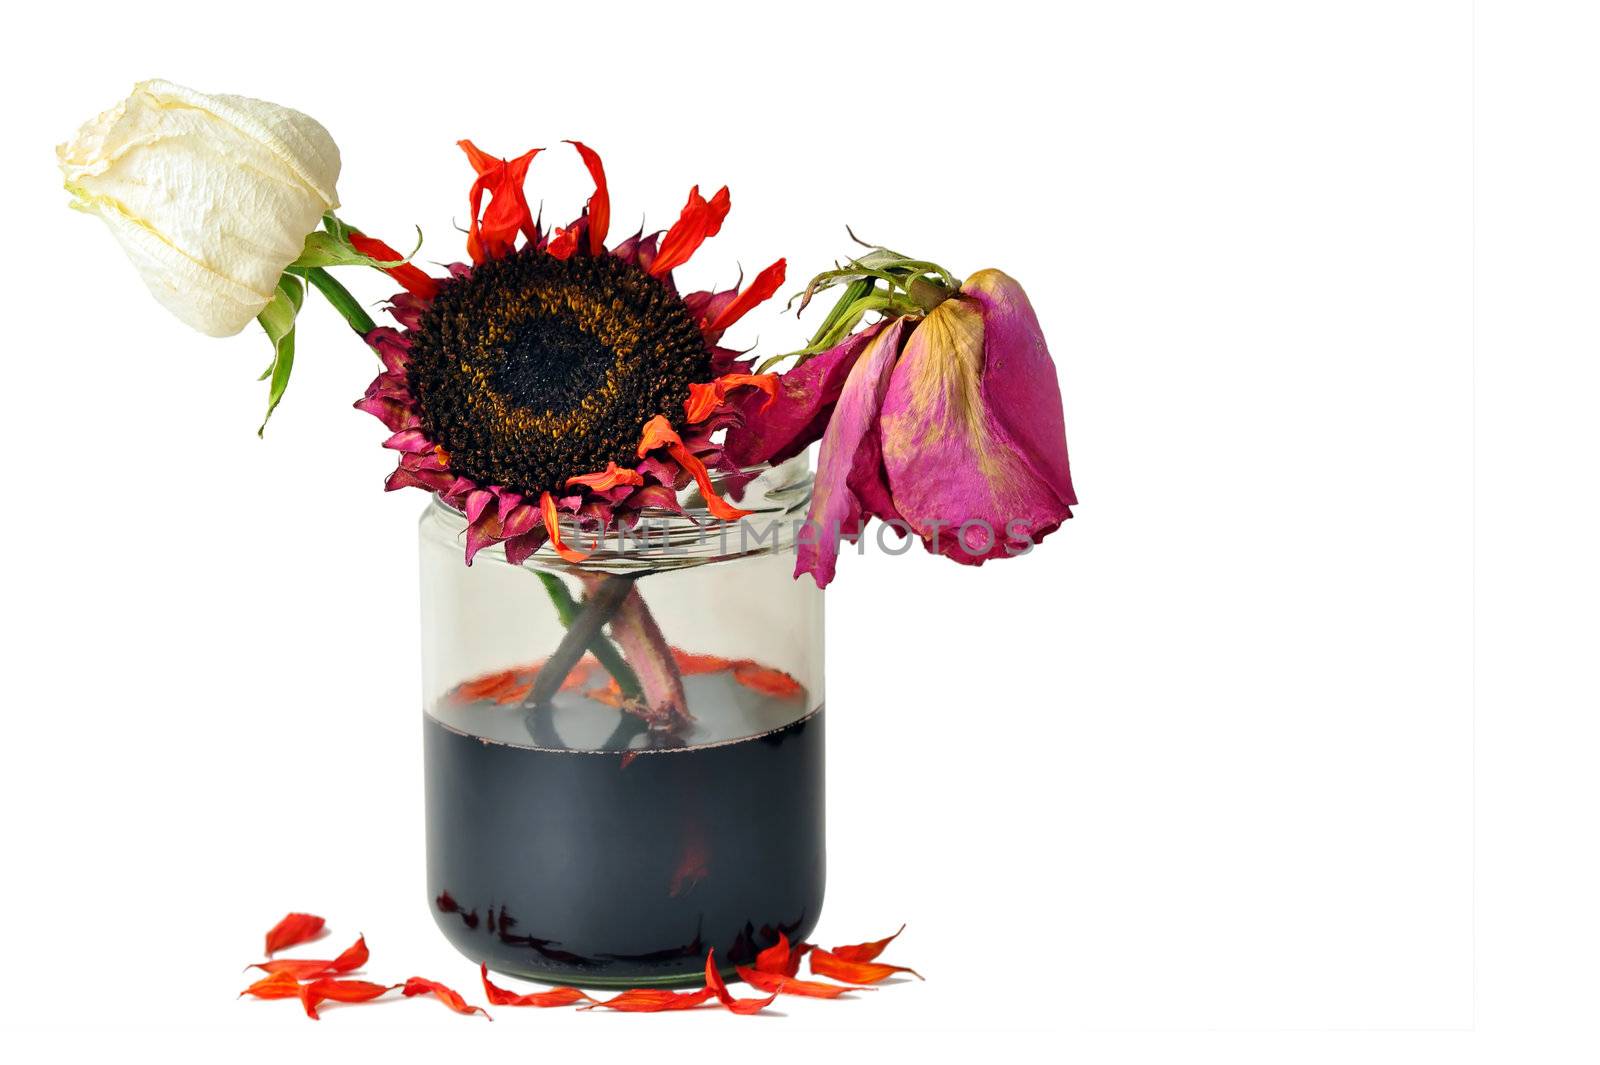 Break up, aging or death concept: Three sad dead wilted flowers in glass jar with merkish dark water.